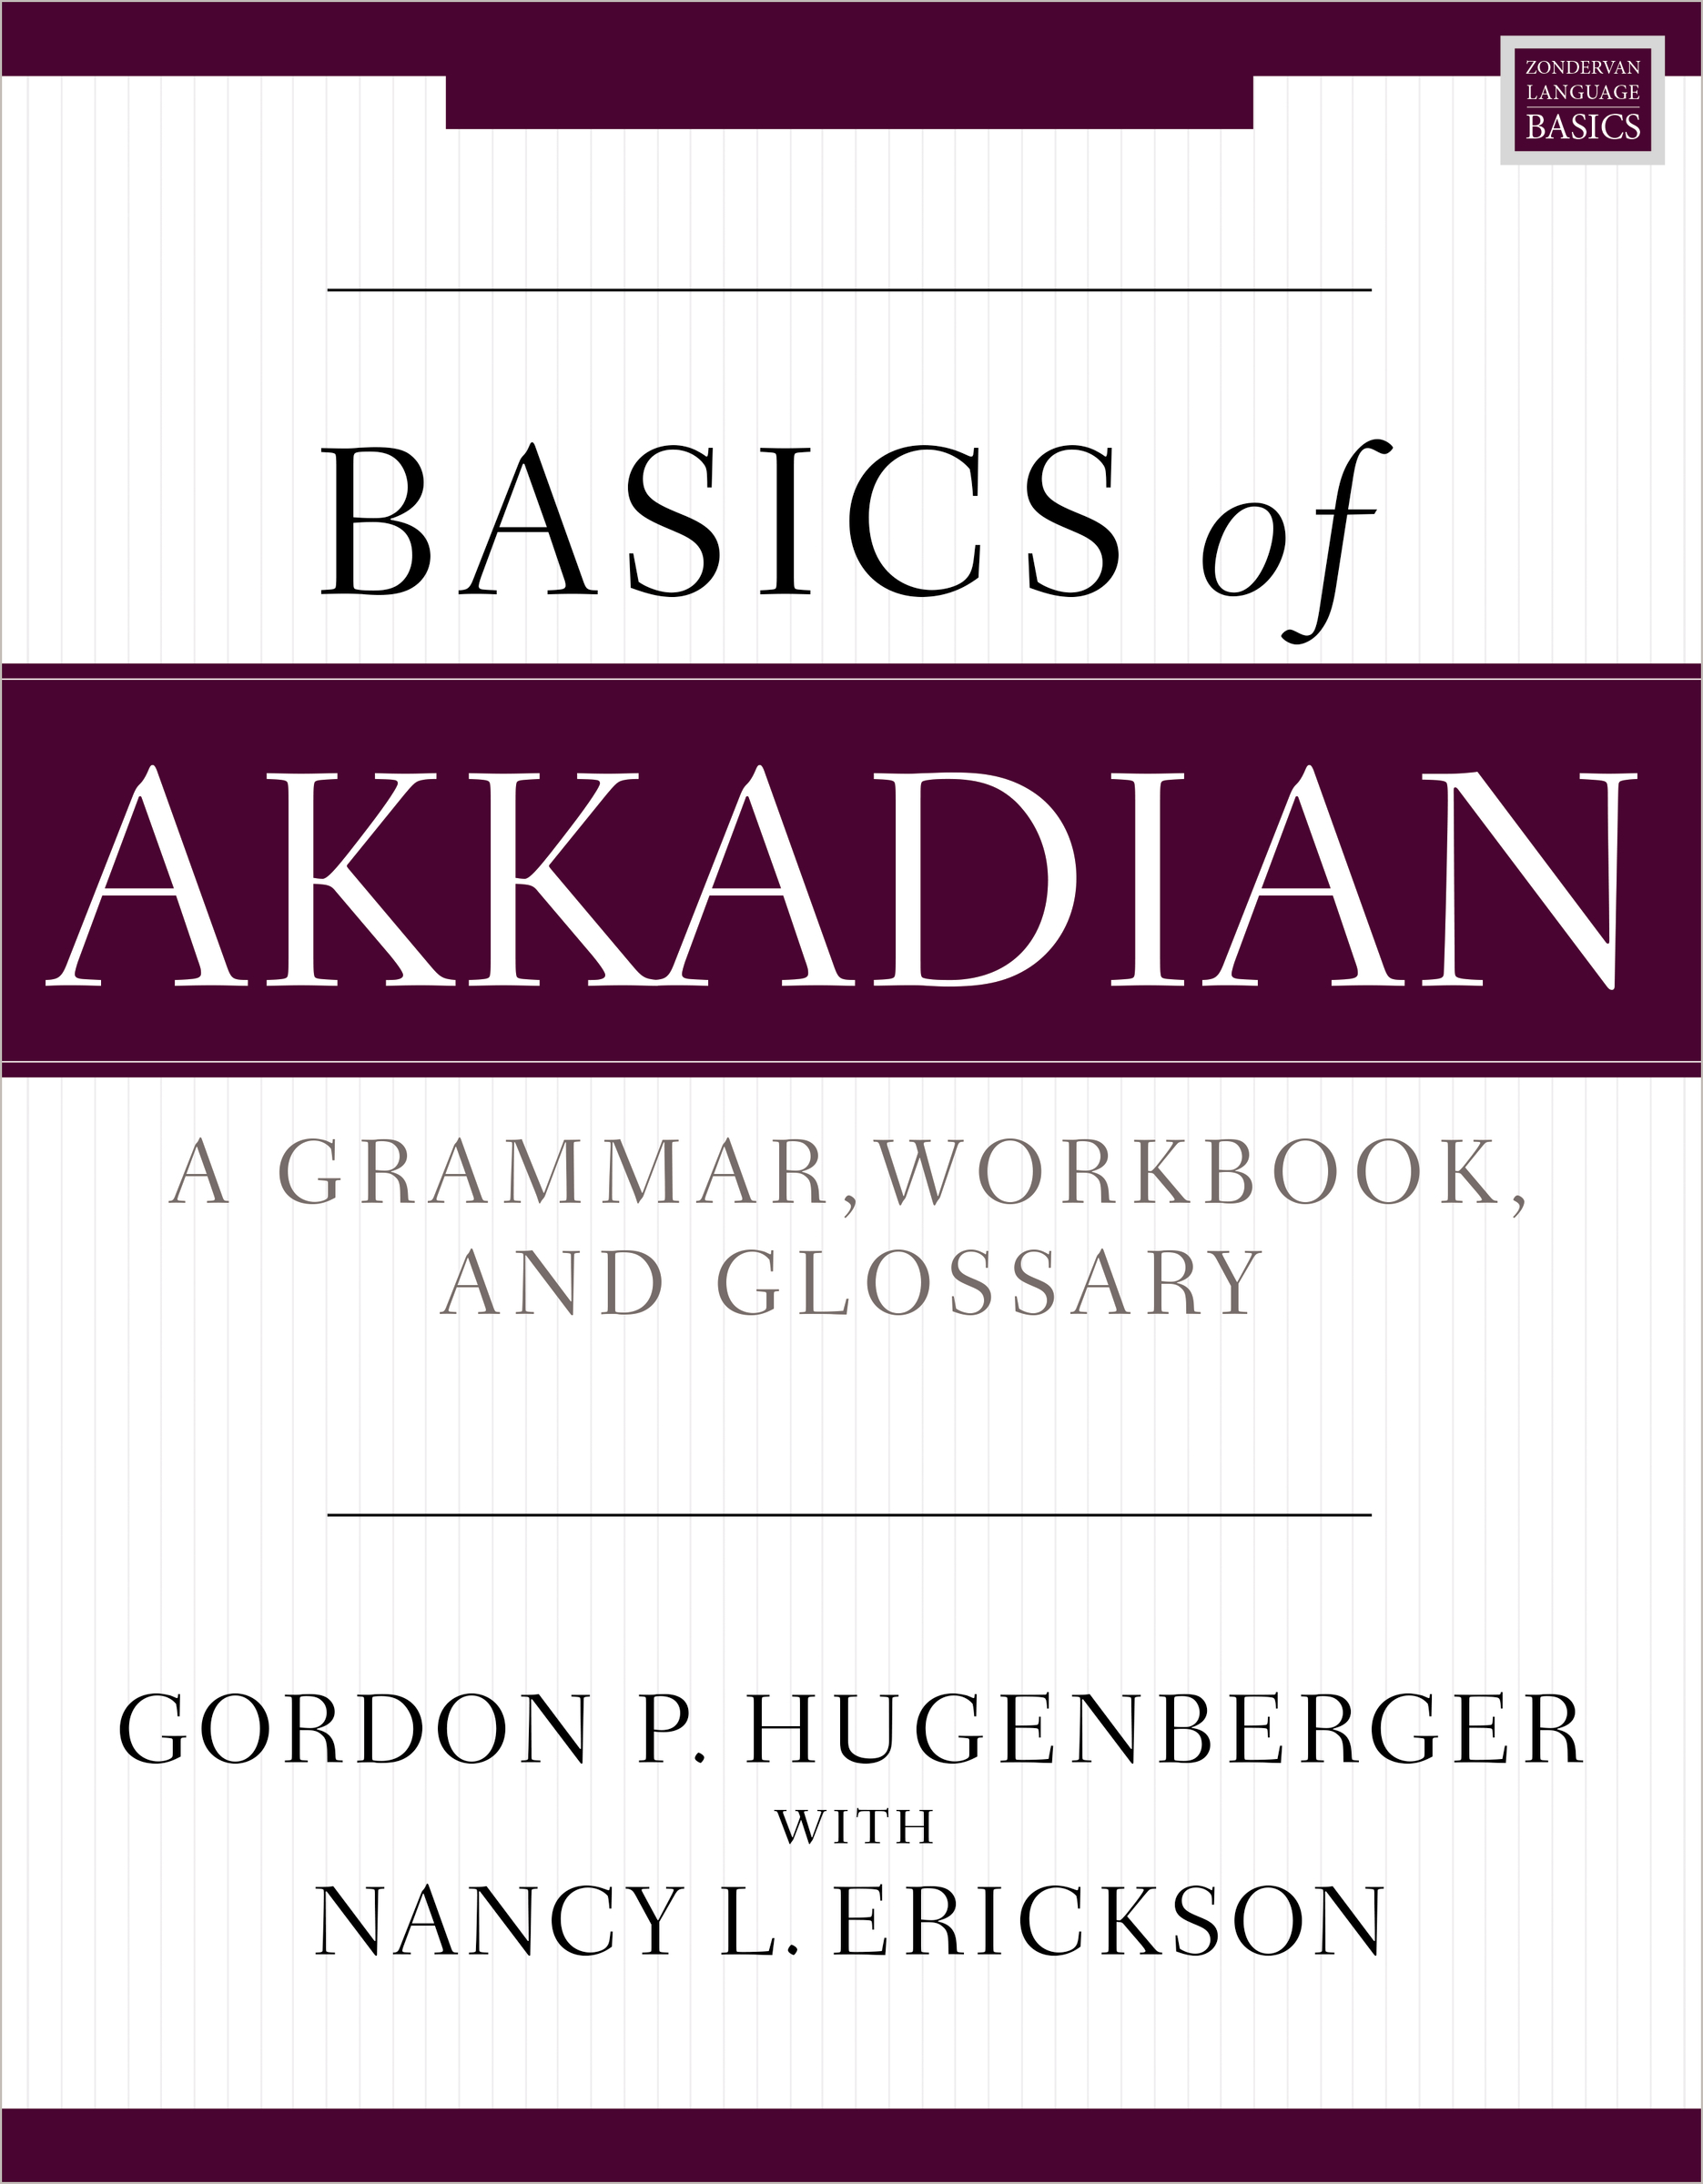 Basics of Akkadian